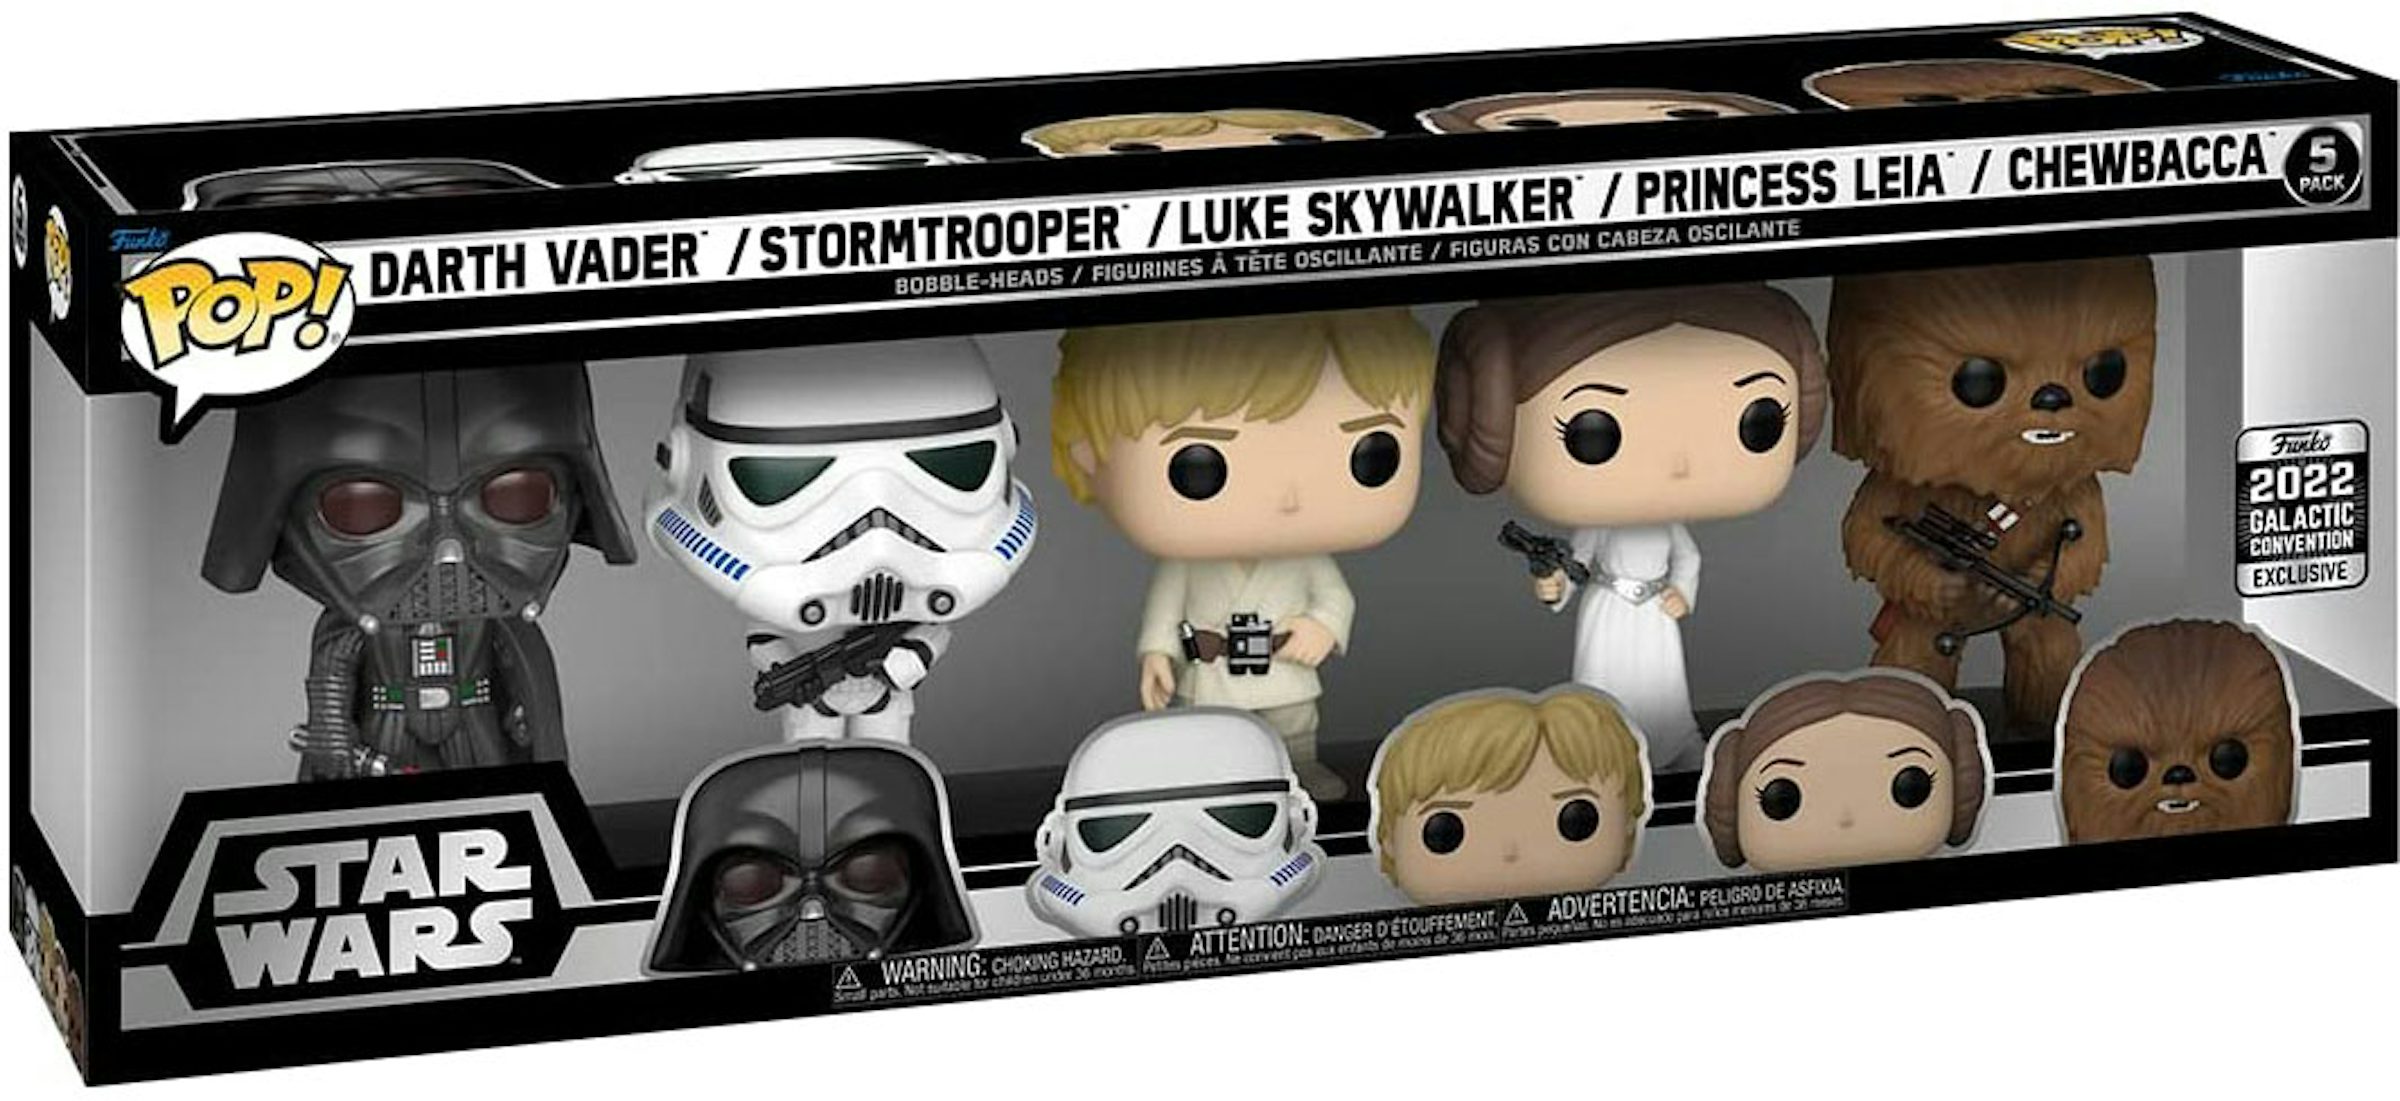 https://images.stockx.com/images/Funko-Pop-Star-Wars-Darth-Vader-Stormtrooper-Luke-Skywalker-Princess-Leia-Chewbacca-2022-Galactic-Convention-Exclusive-5-Pack.jpg?fit=fill&bg=FFFFFF&w=1200&h=857&fm=jpg&auto=compress&dpr=2&trim=color&updated_at=1654204461&q=60